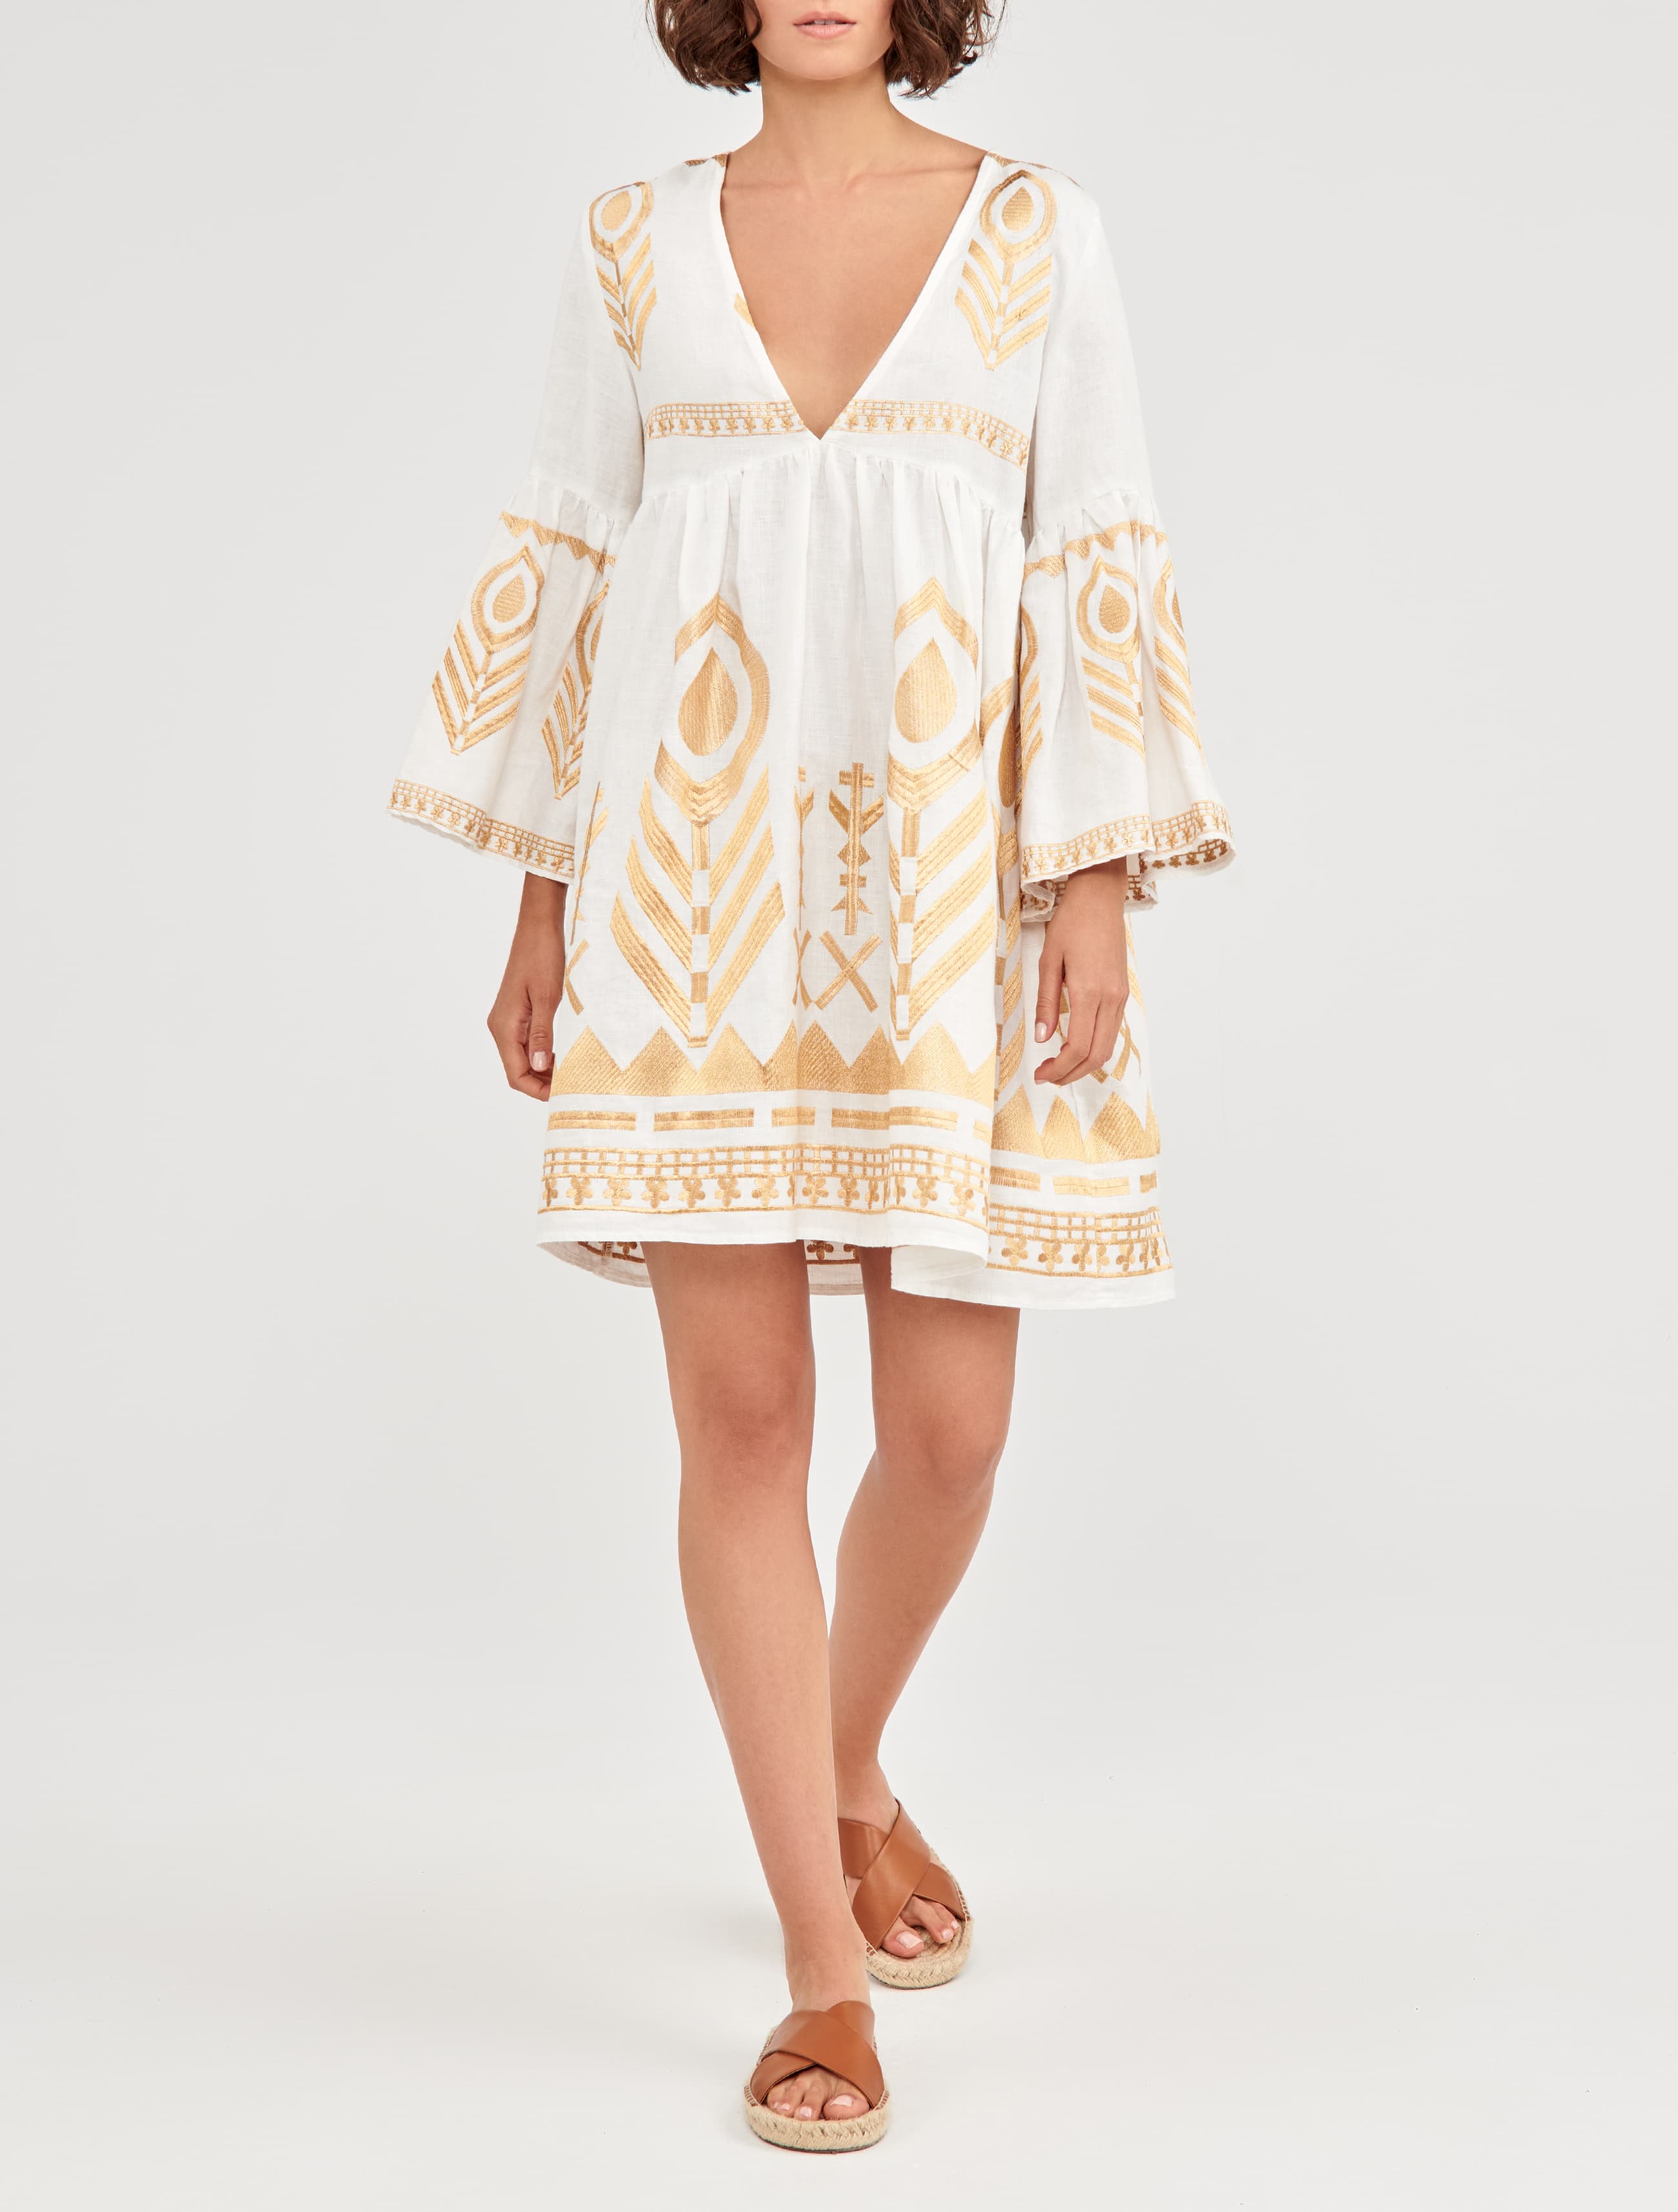 Greek Archaic Kori Short White Dress with gold